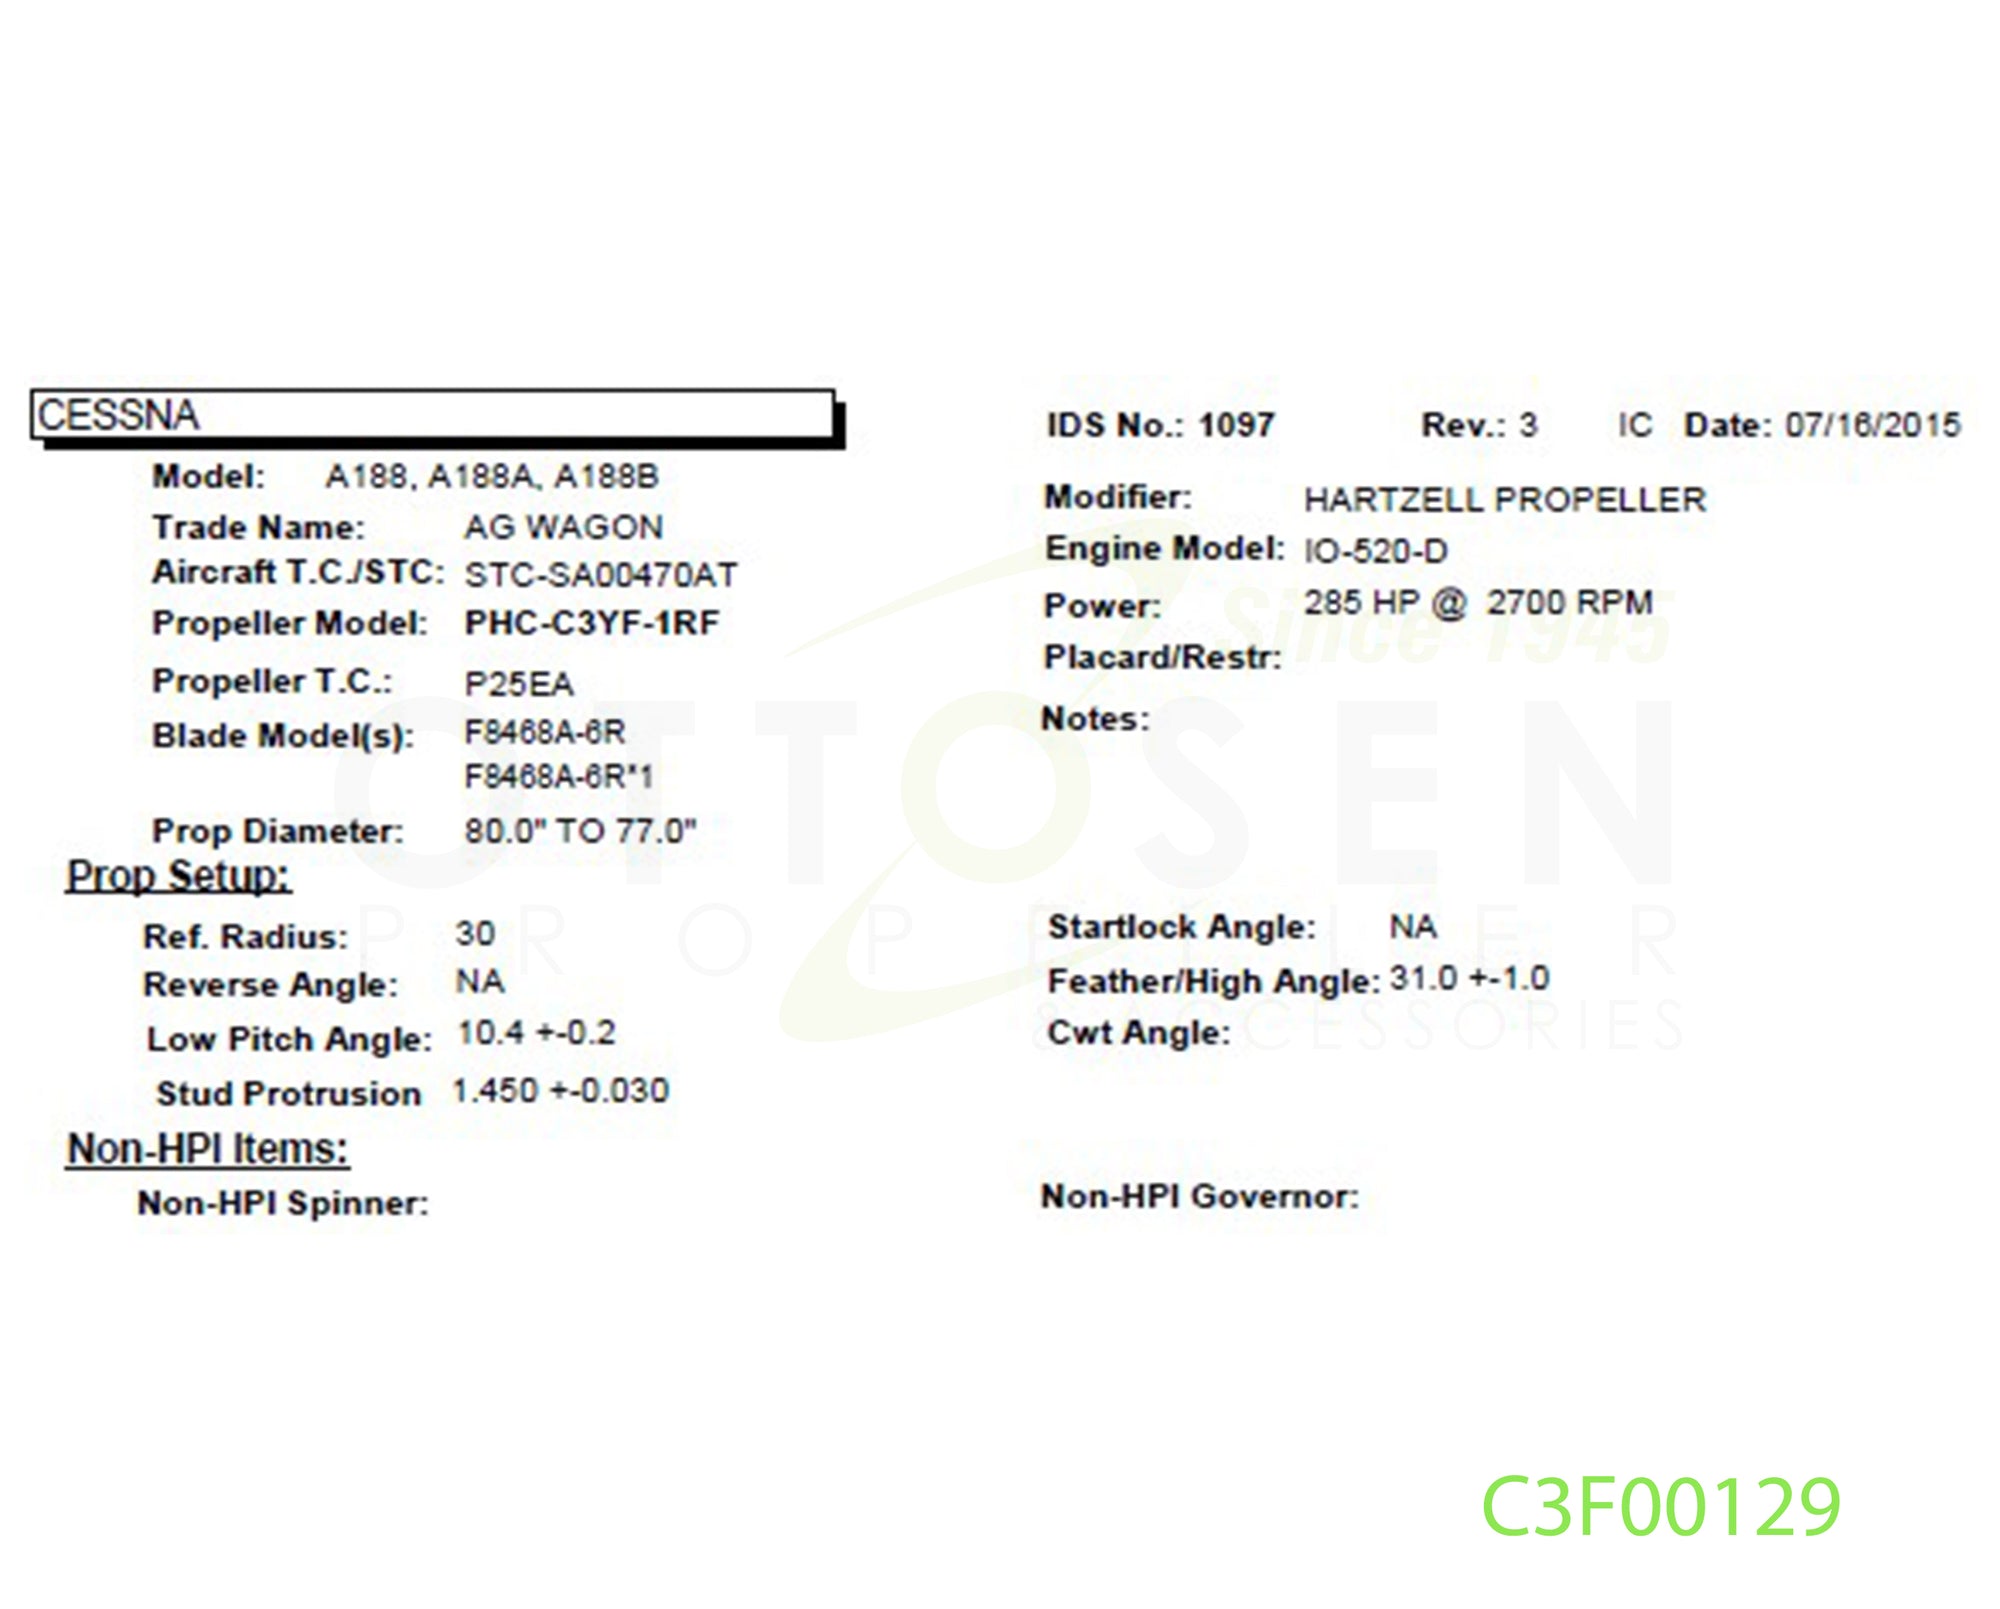 C3F00129-HARTZELL-PROPELLER-PHC-C3YF-1RF-F8468A-6R-SM6-PICTURE-1